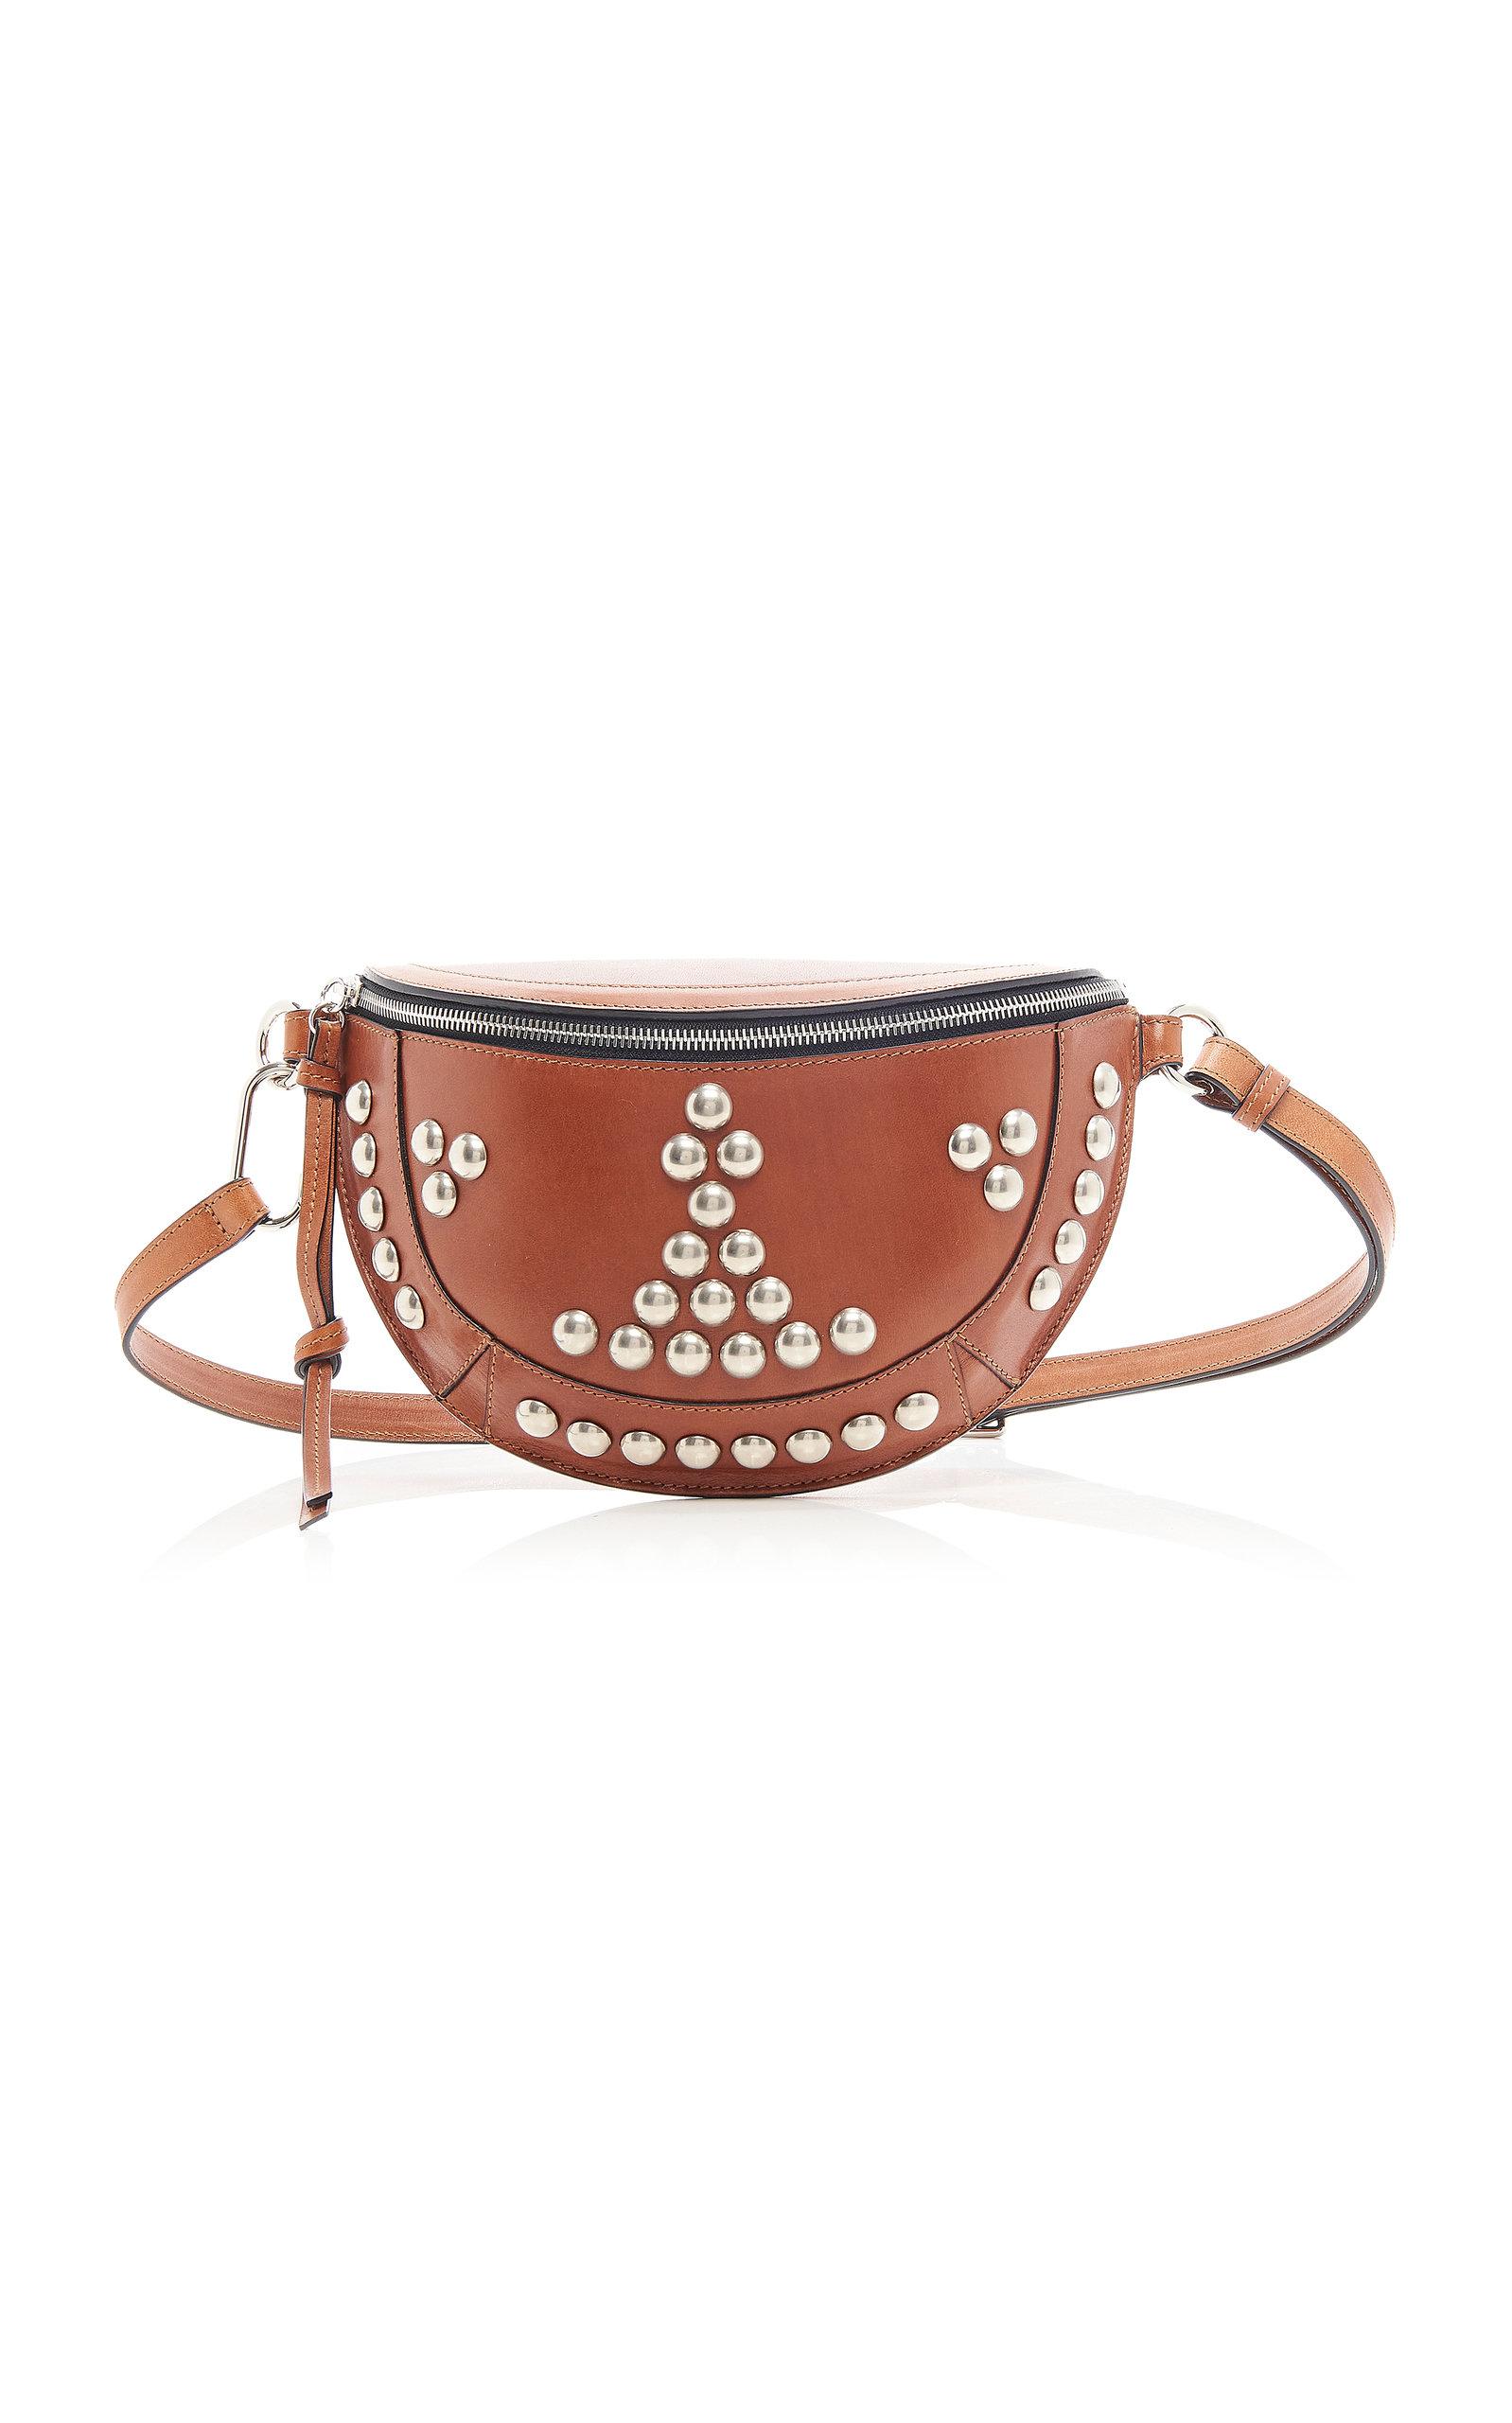 Isabel Marant Skano Studded Leather Belt Bag in Brown - Lyst